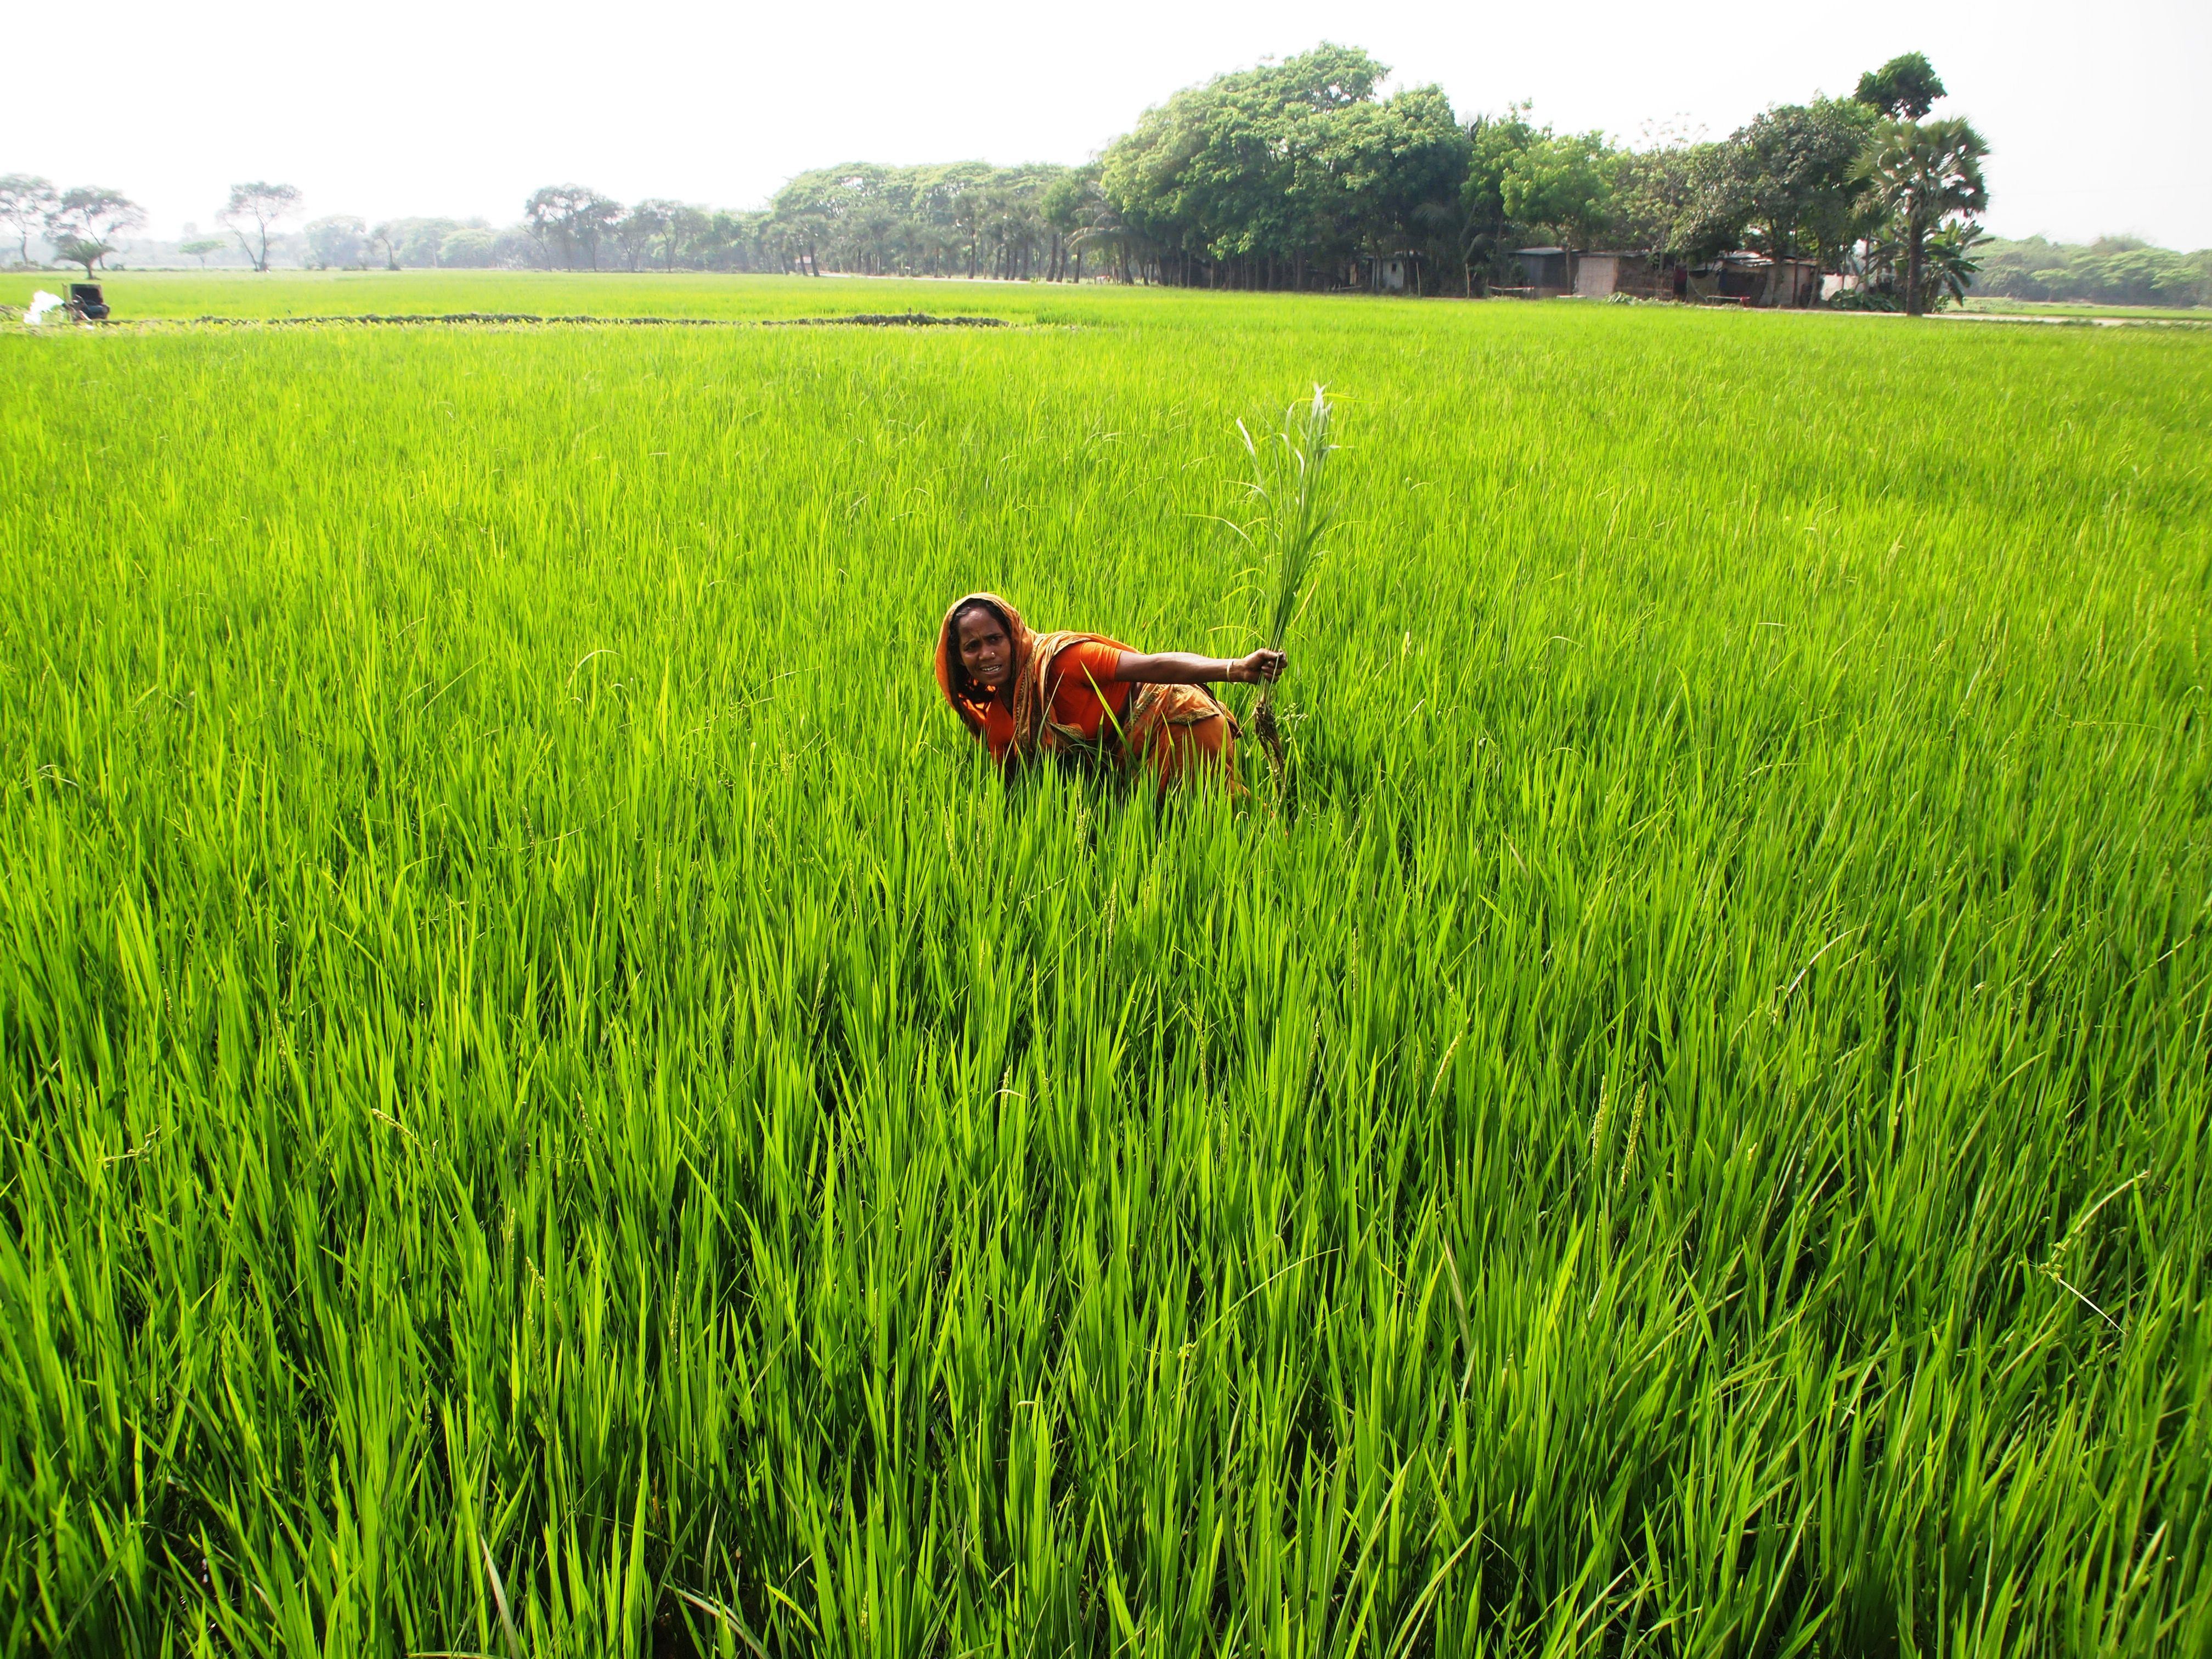 Bangladesh rice farm | Bangladesh | Pinterest